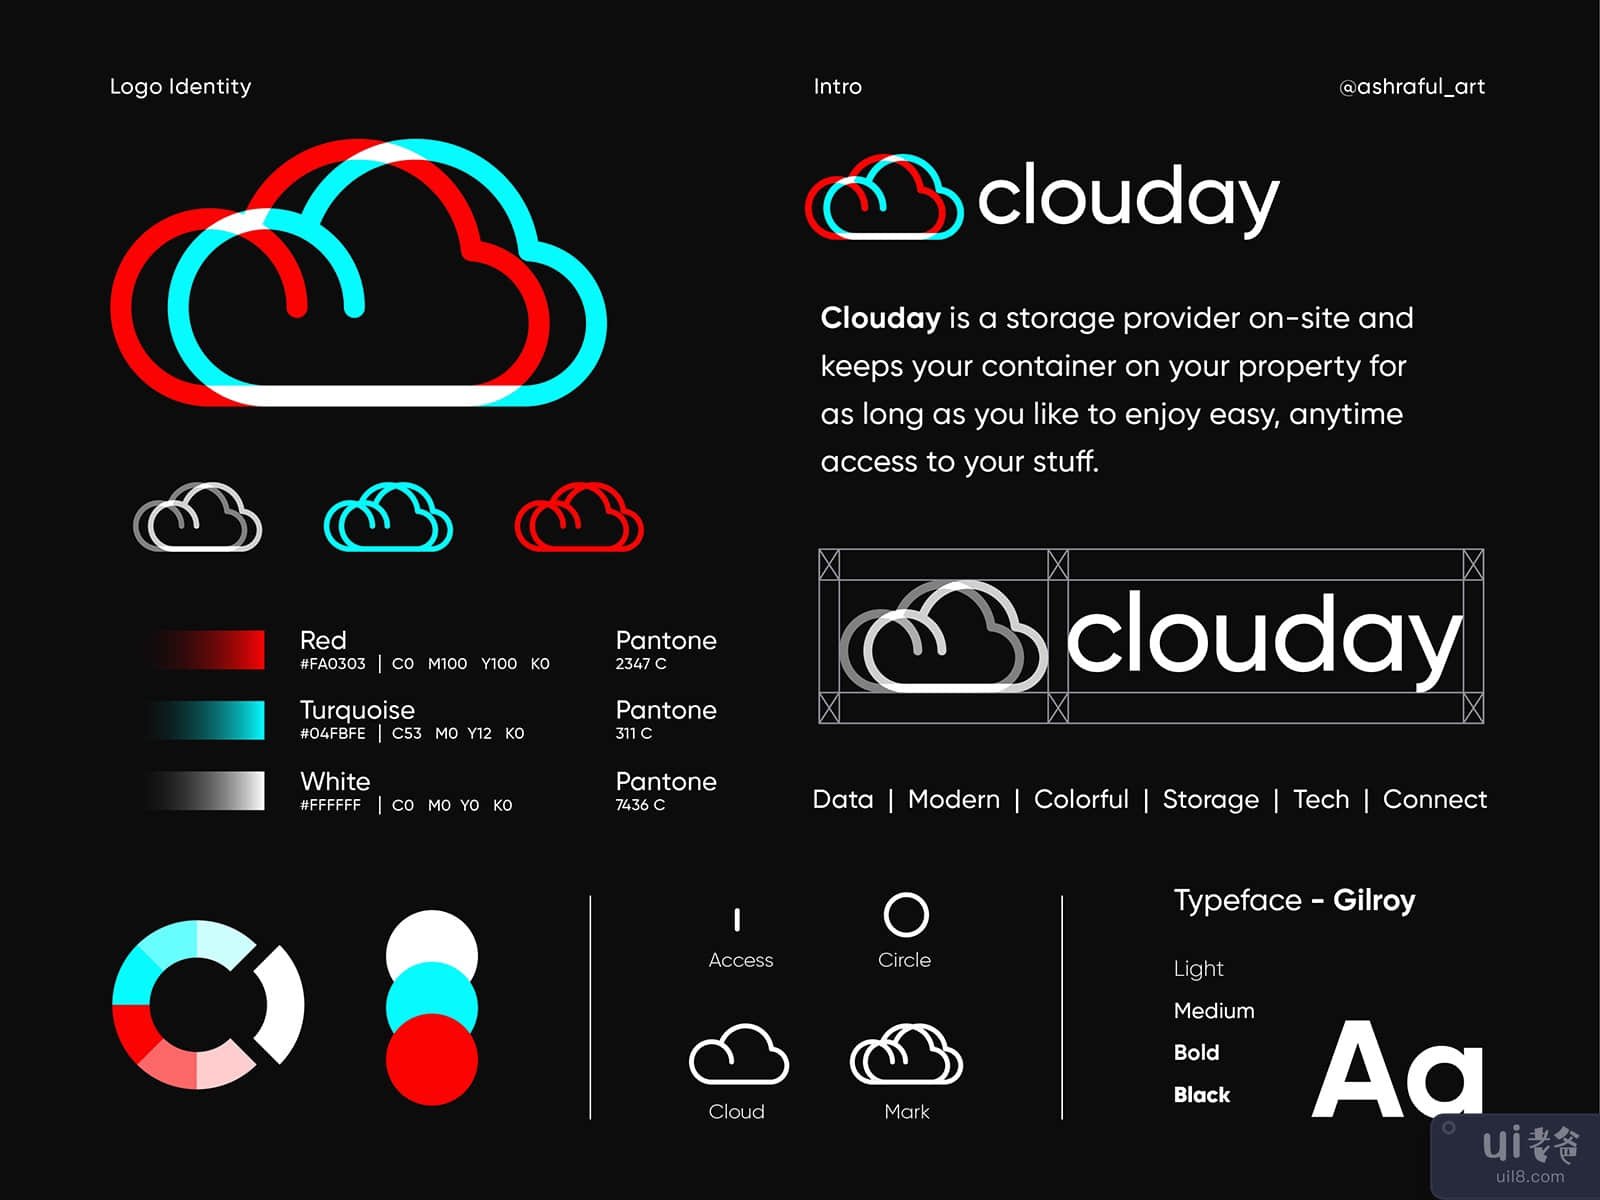 Clouday Logo Identity